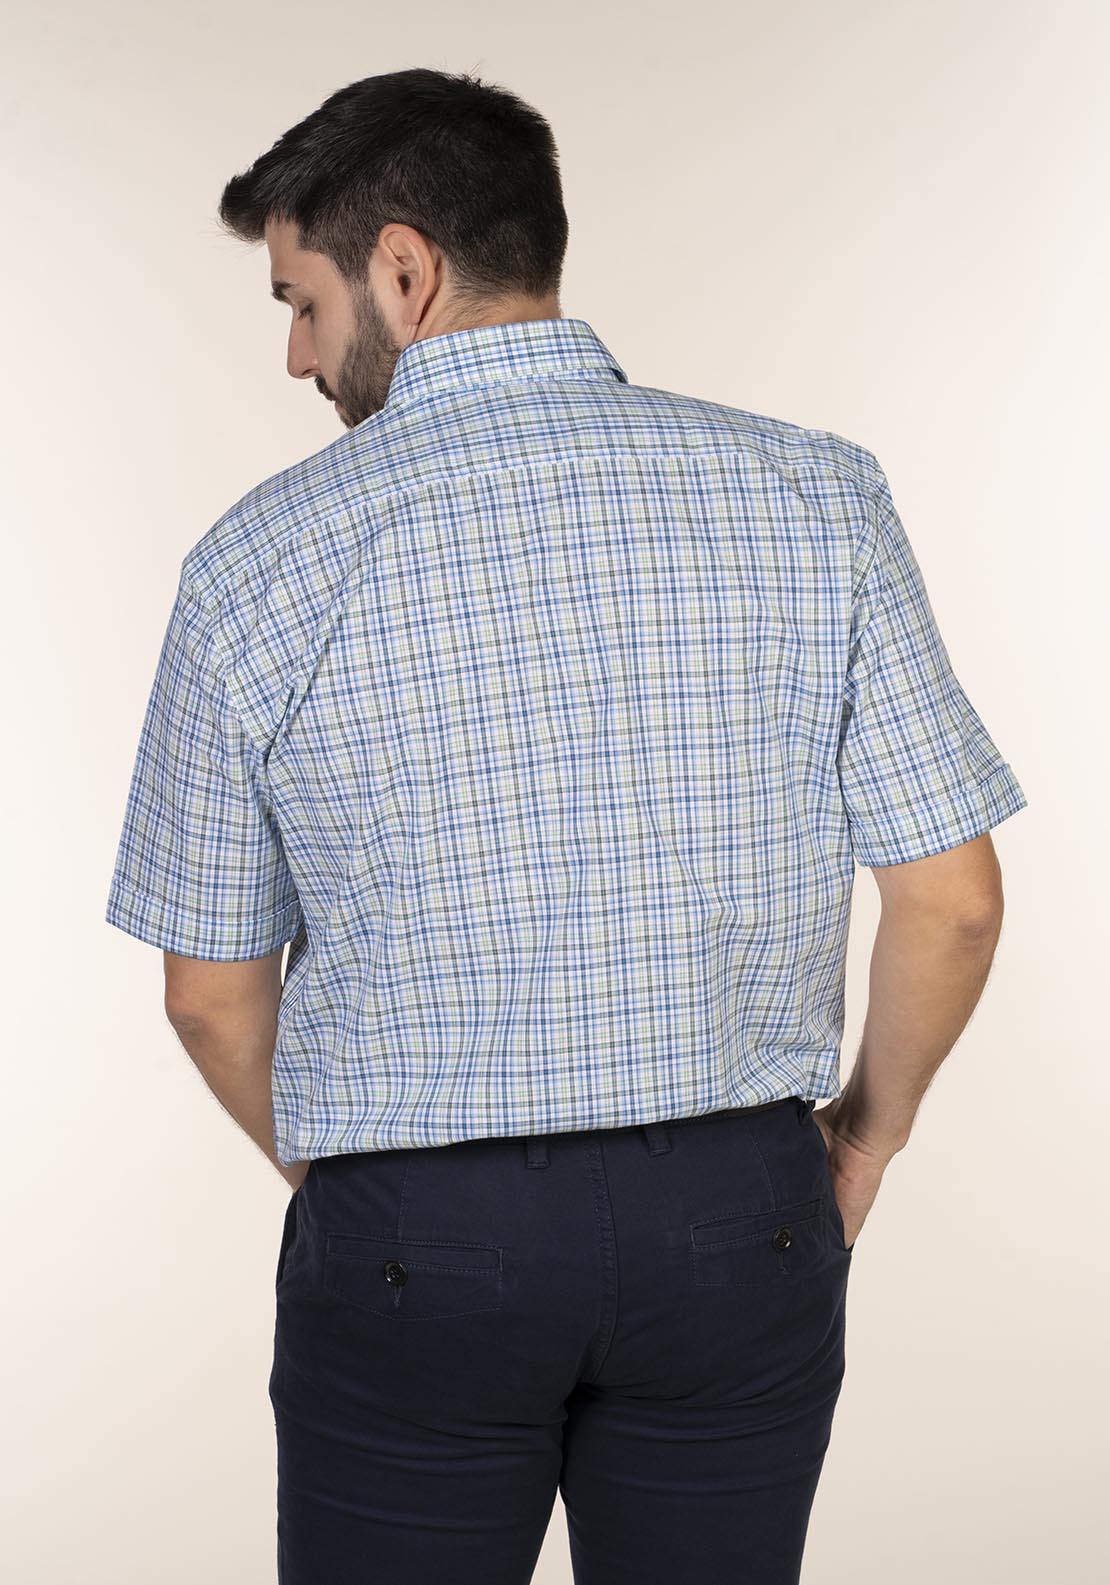 Yeats Casual Check Short Sleeve Shirt 2 Shaws Department Stores